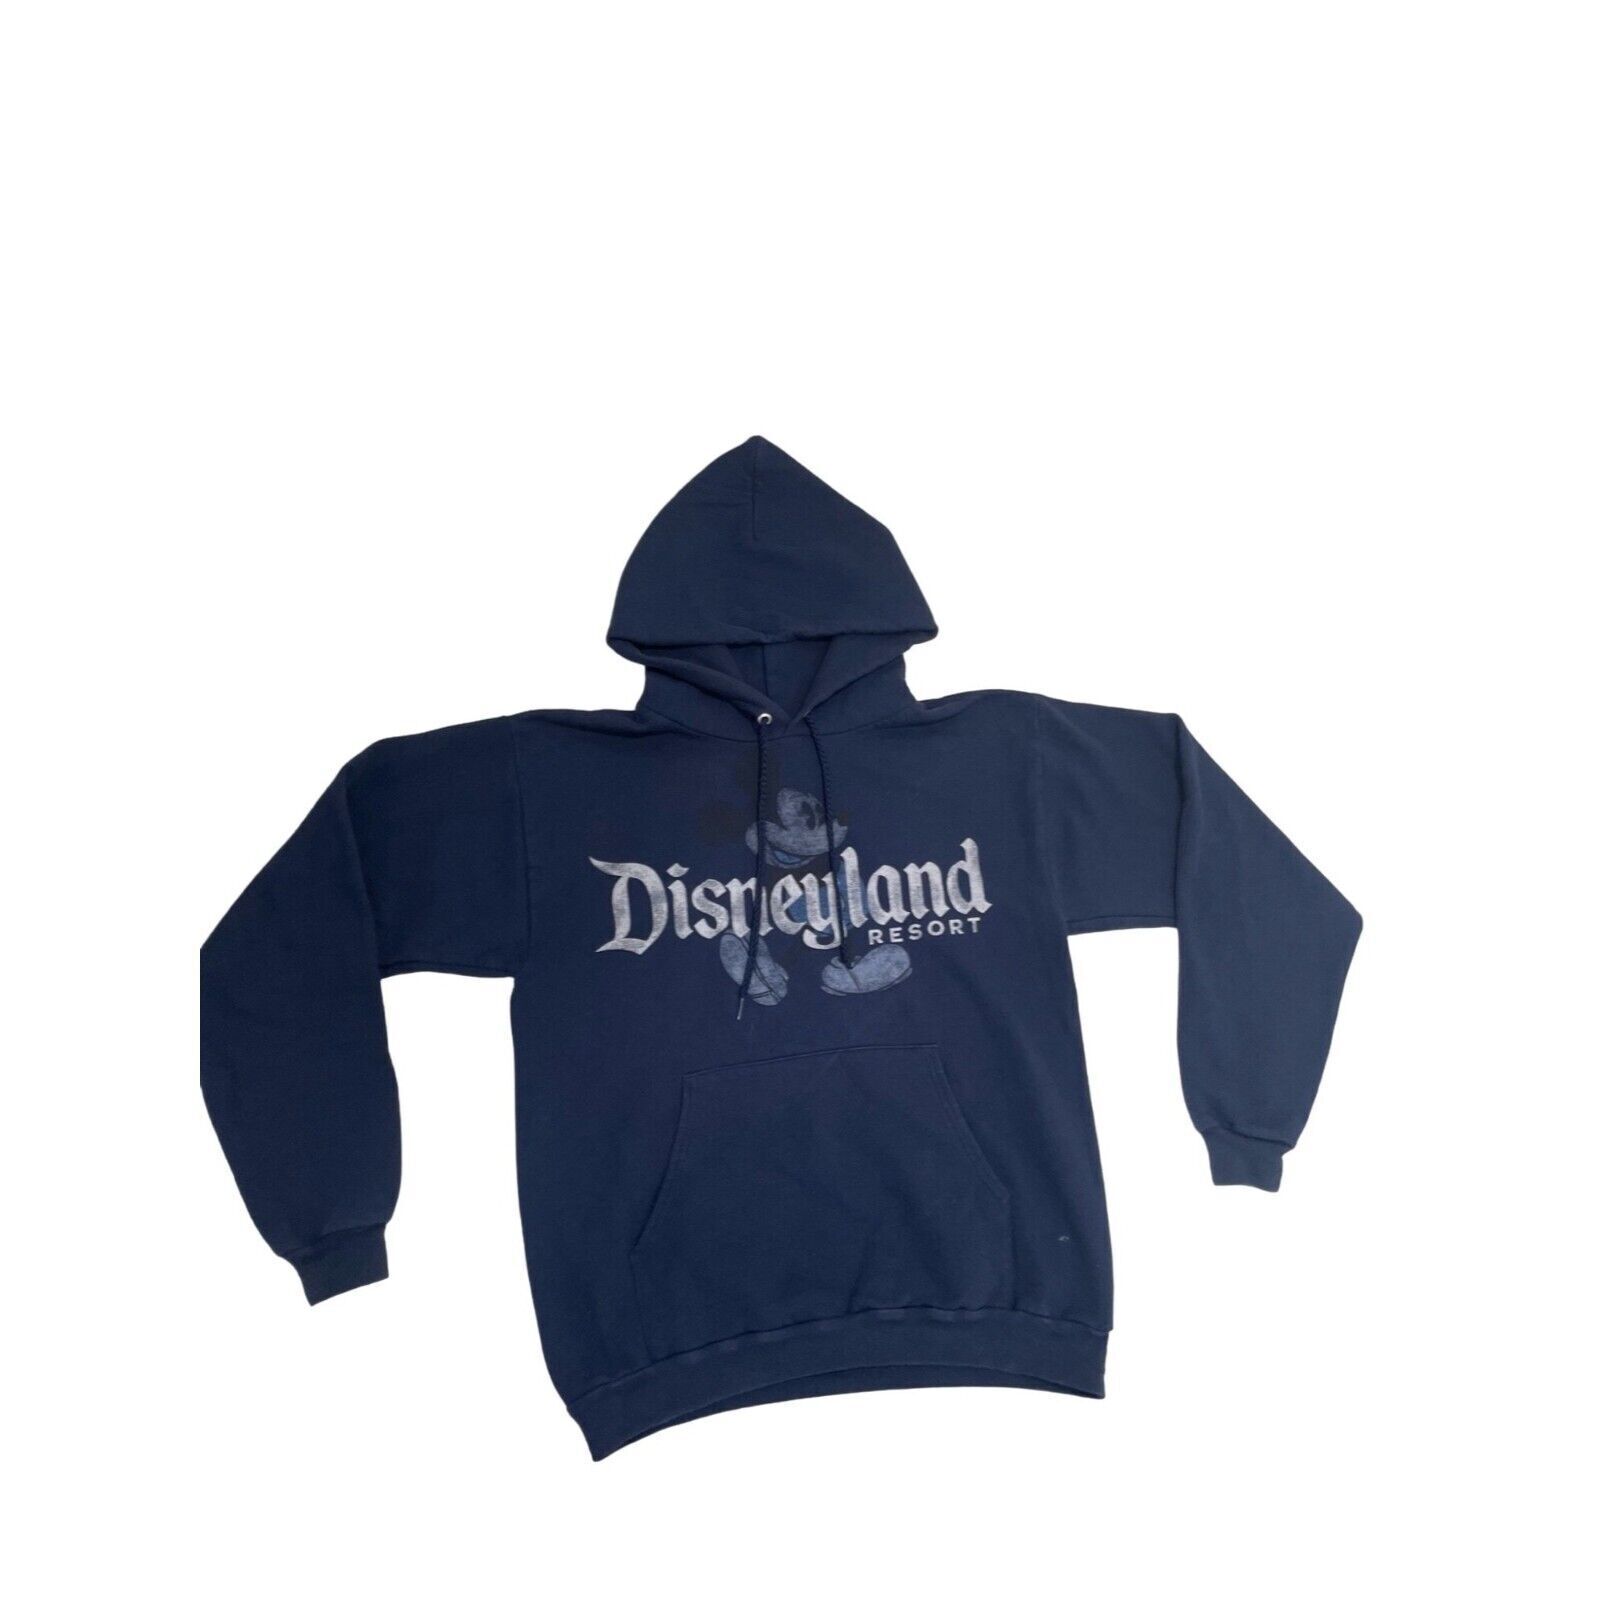 Disneyland Resorts Navy Blue Pullover Hoodie Size Small